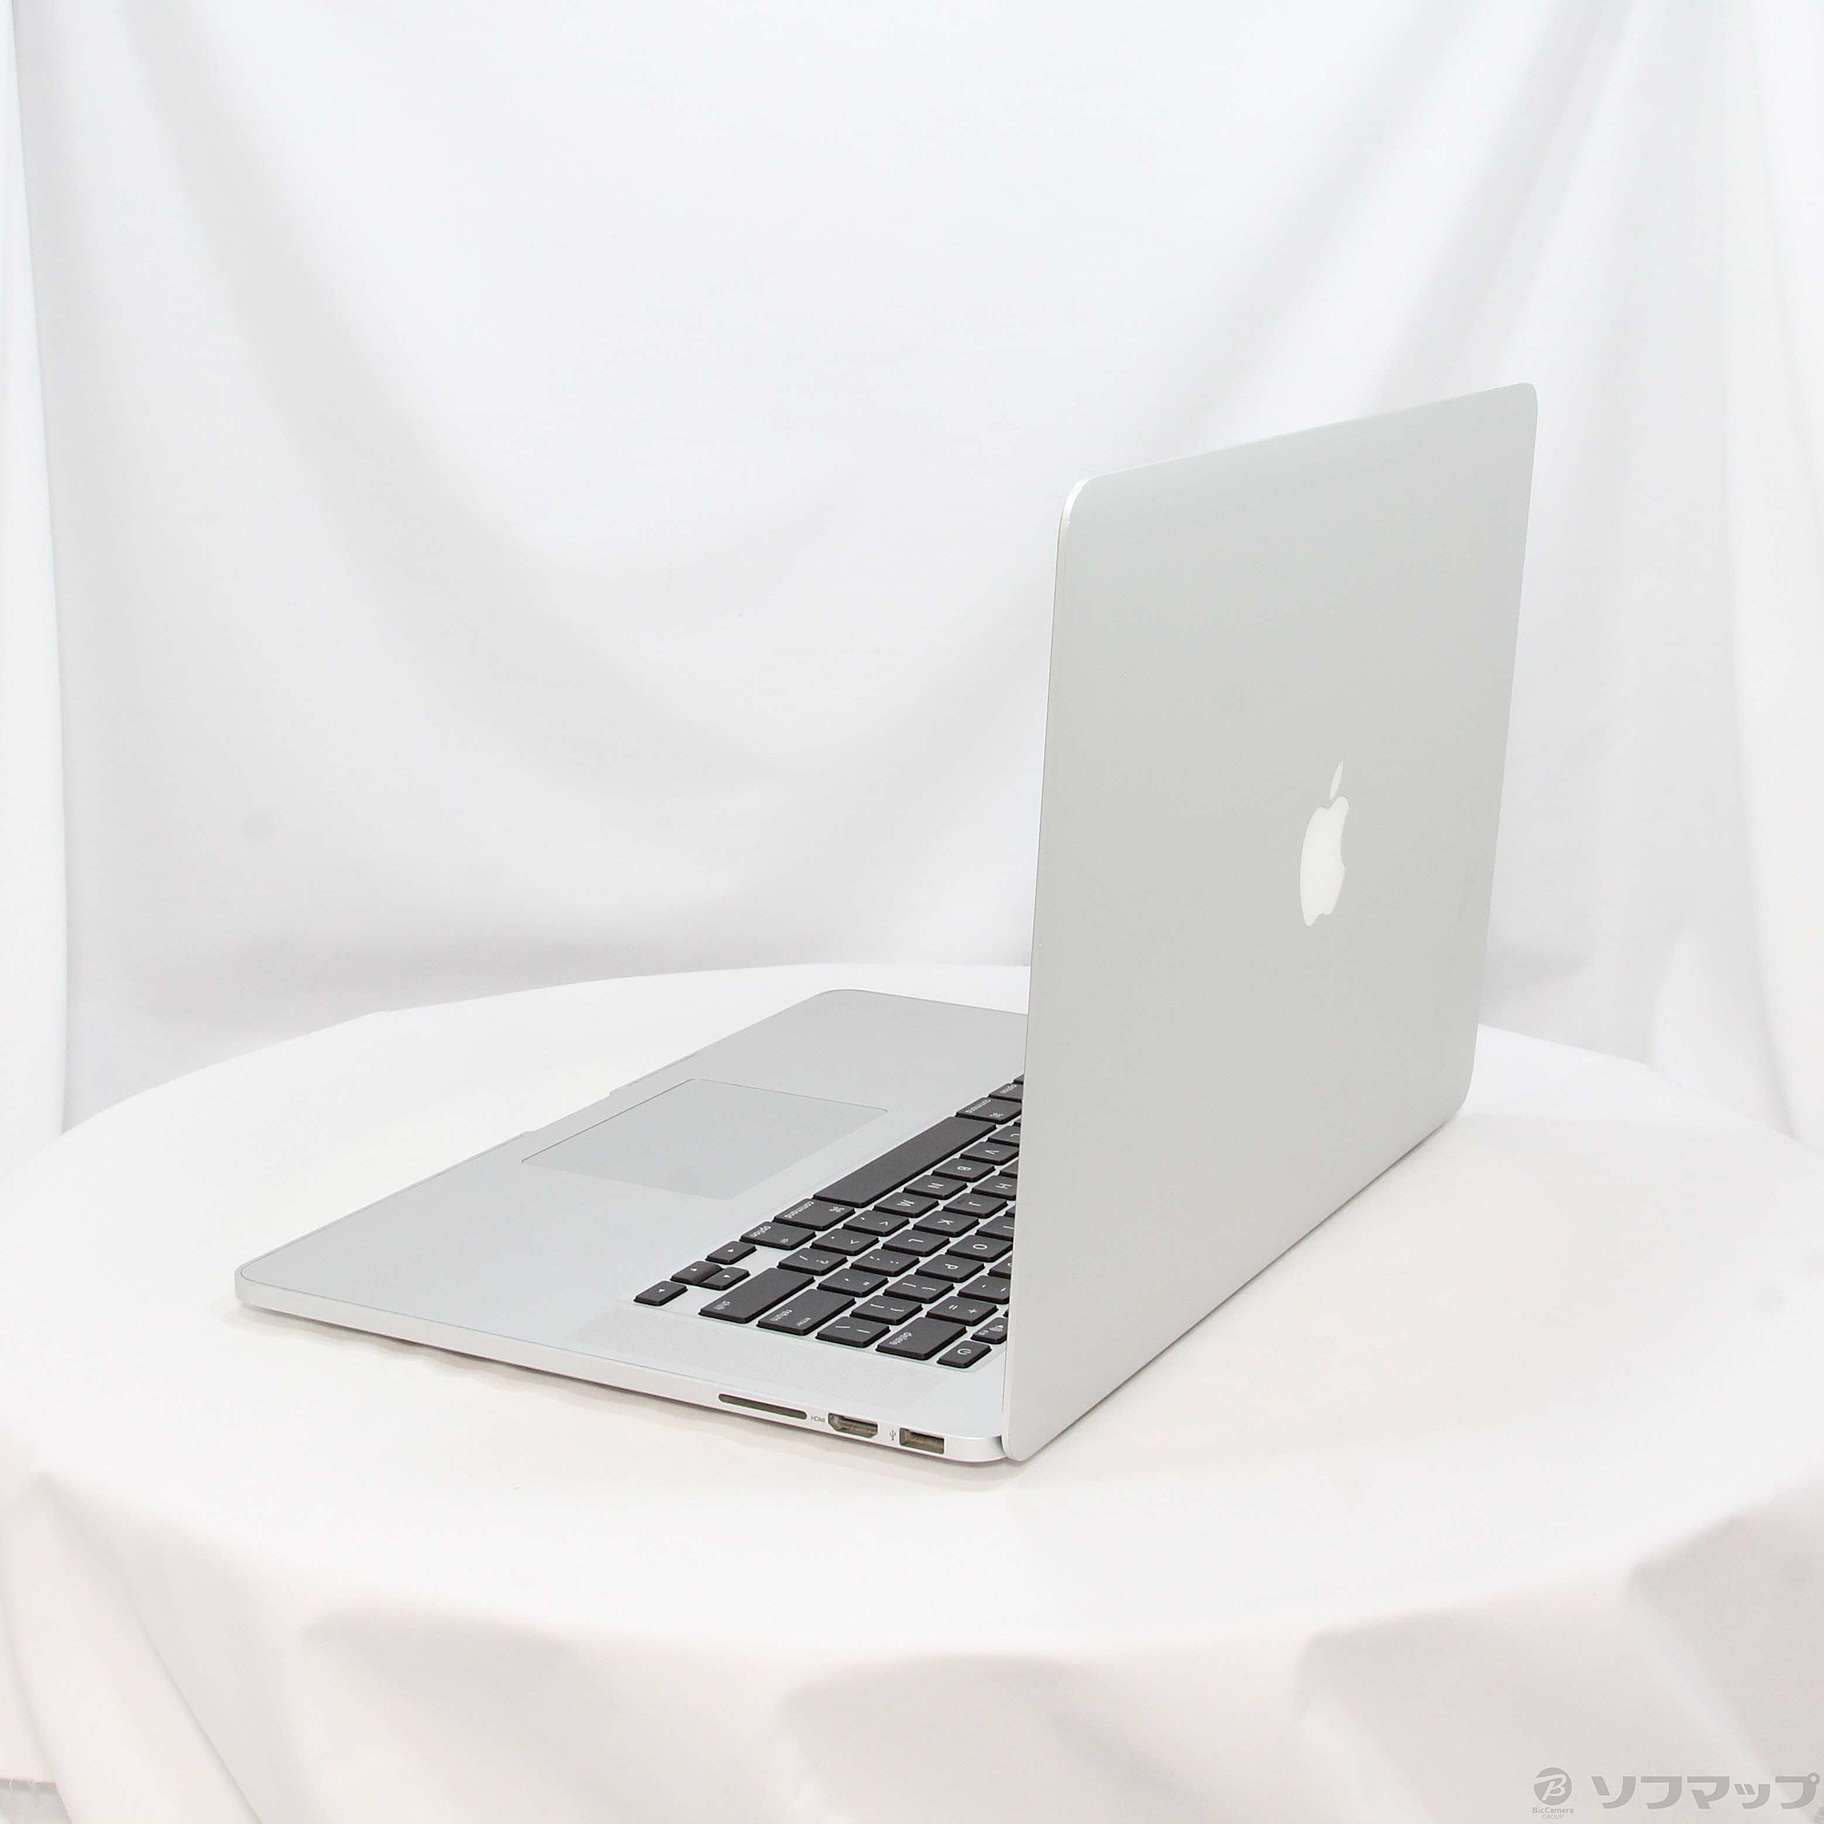 中古】セール対象品 MacBook Pro 15-inch Mid 2012 MC976J／A Core_i7